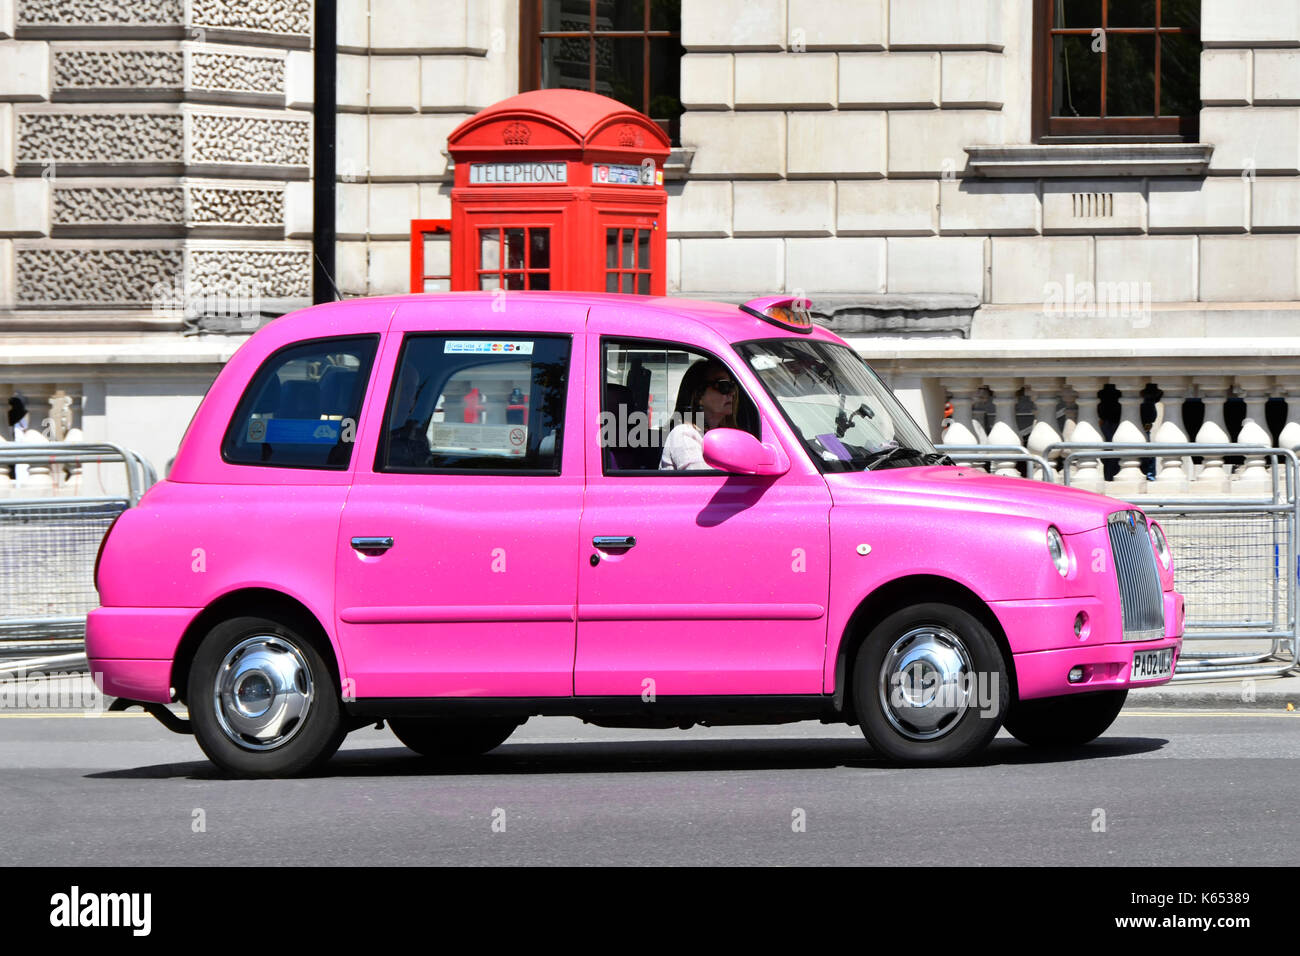 Rosa taxi london -Fotos und -Bildmaterial in hoher Auflösung – Alamy